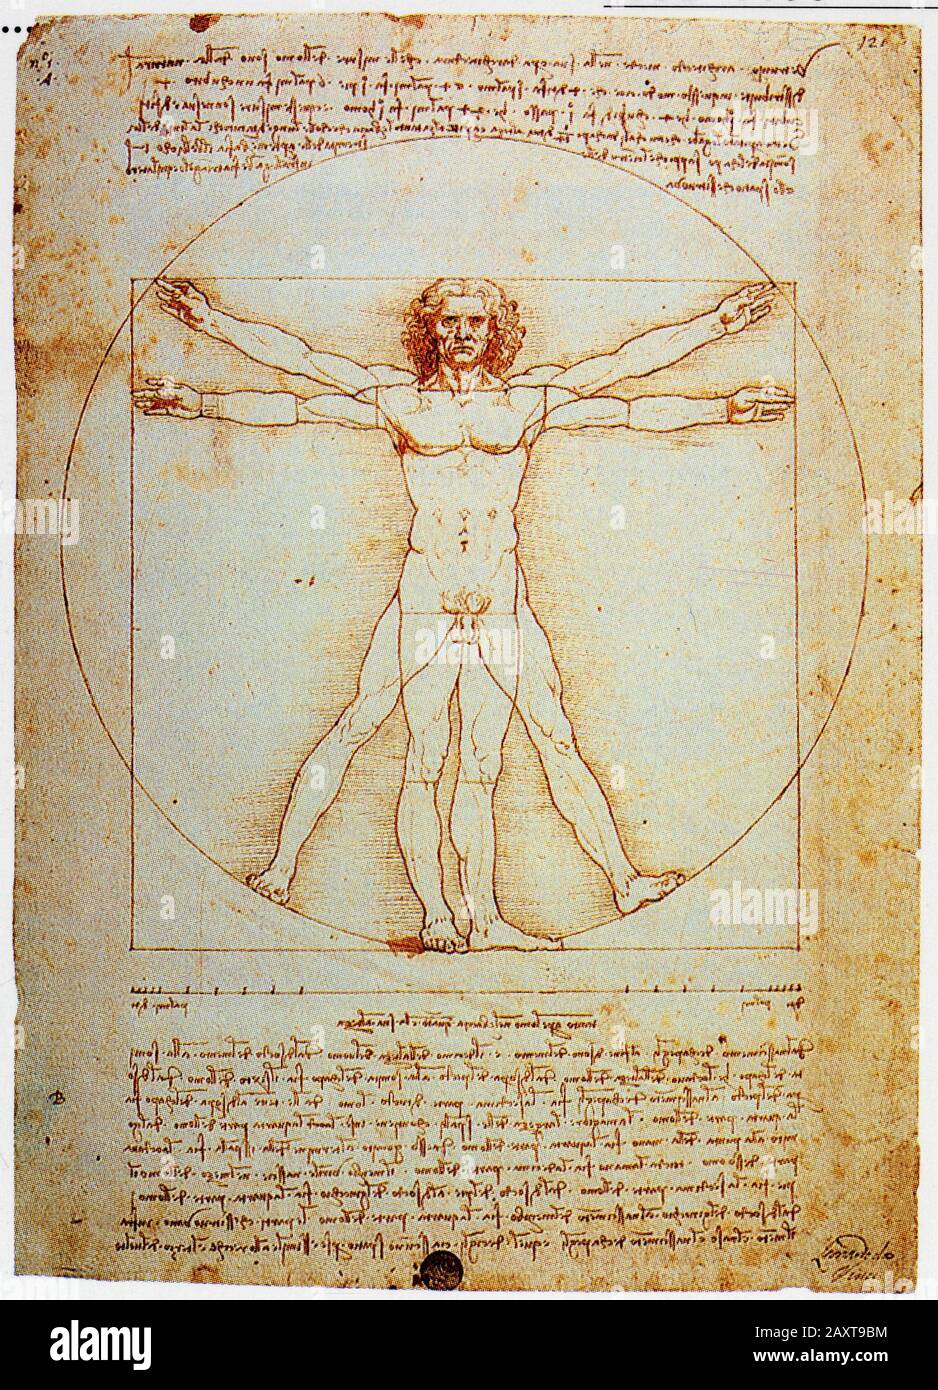 Leonardo da Vinci. Proportions of the human figure. Frontispiece to pacioli's de divina proportione. 1498 Stock Photo